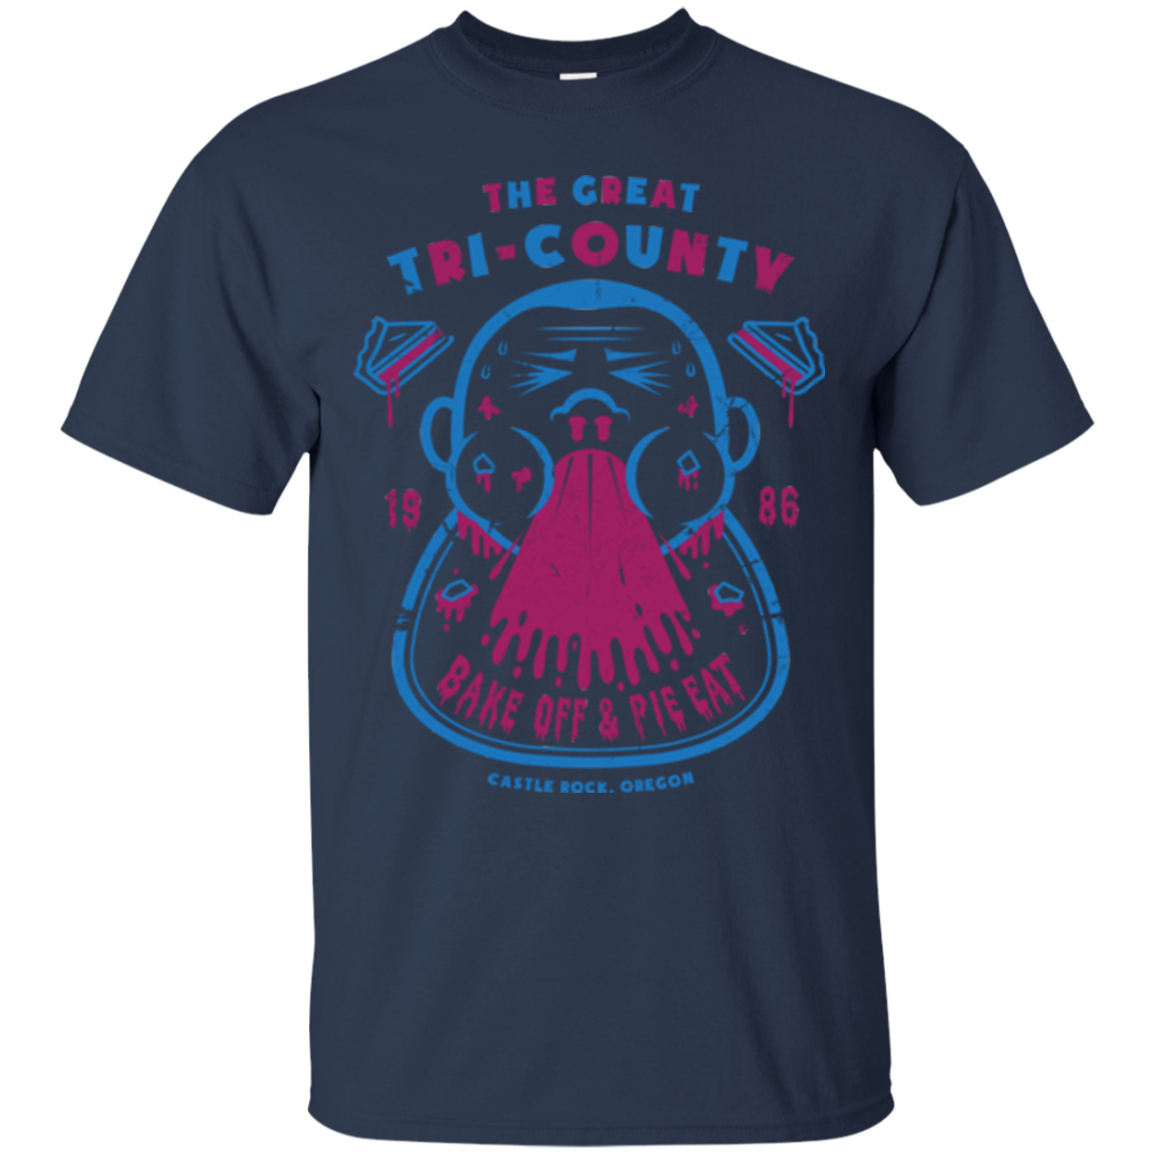 Tri County Pie Eating T-Shirt